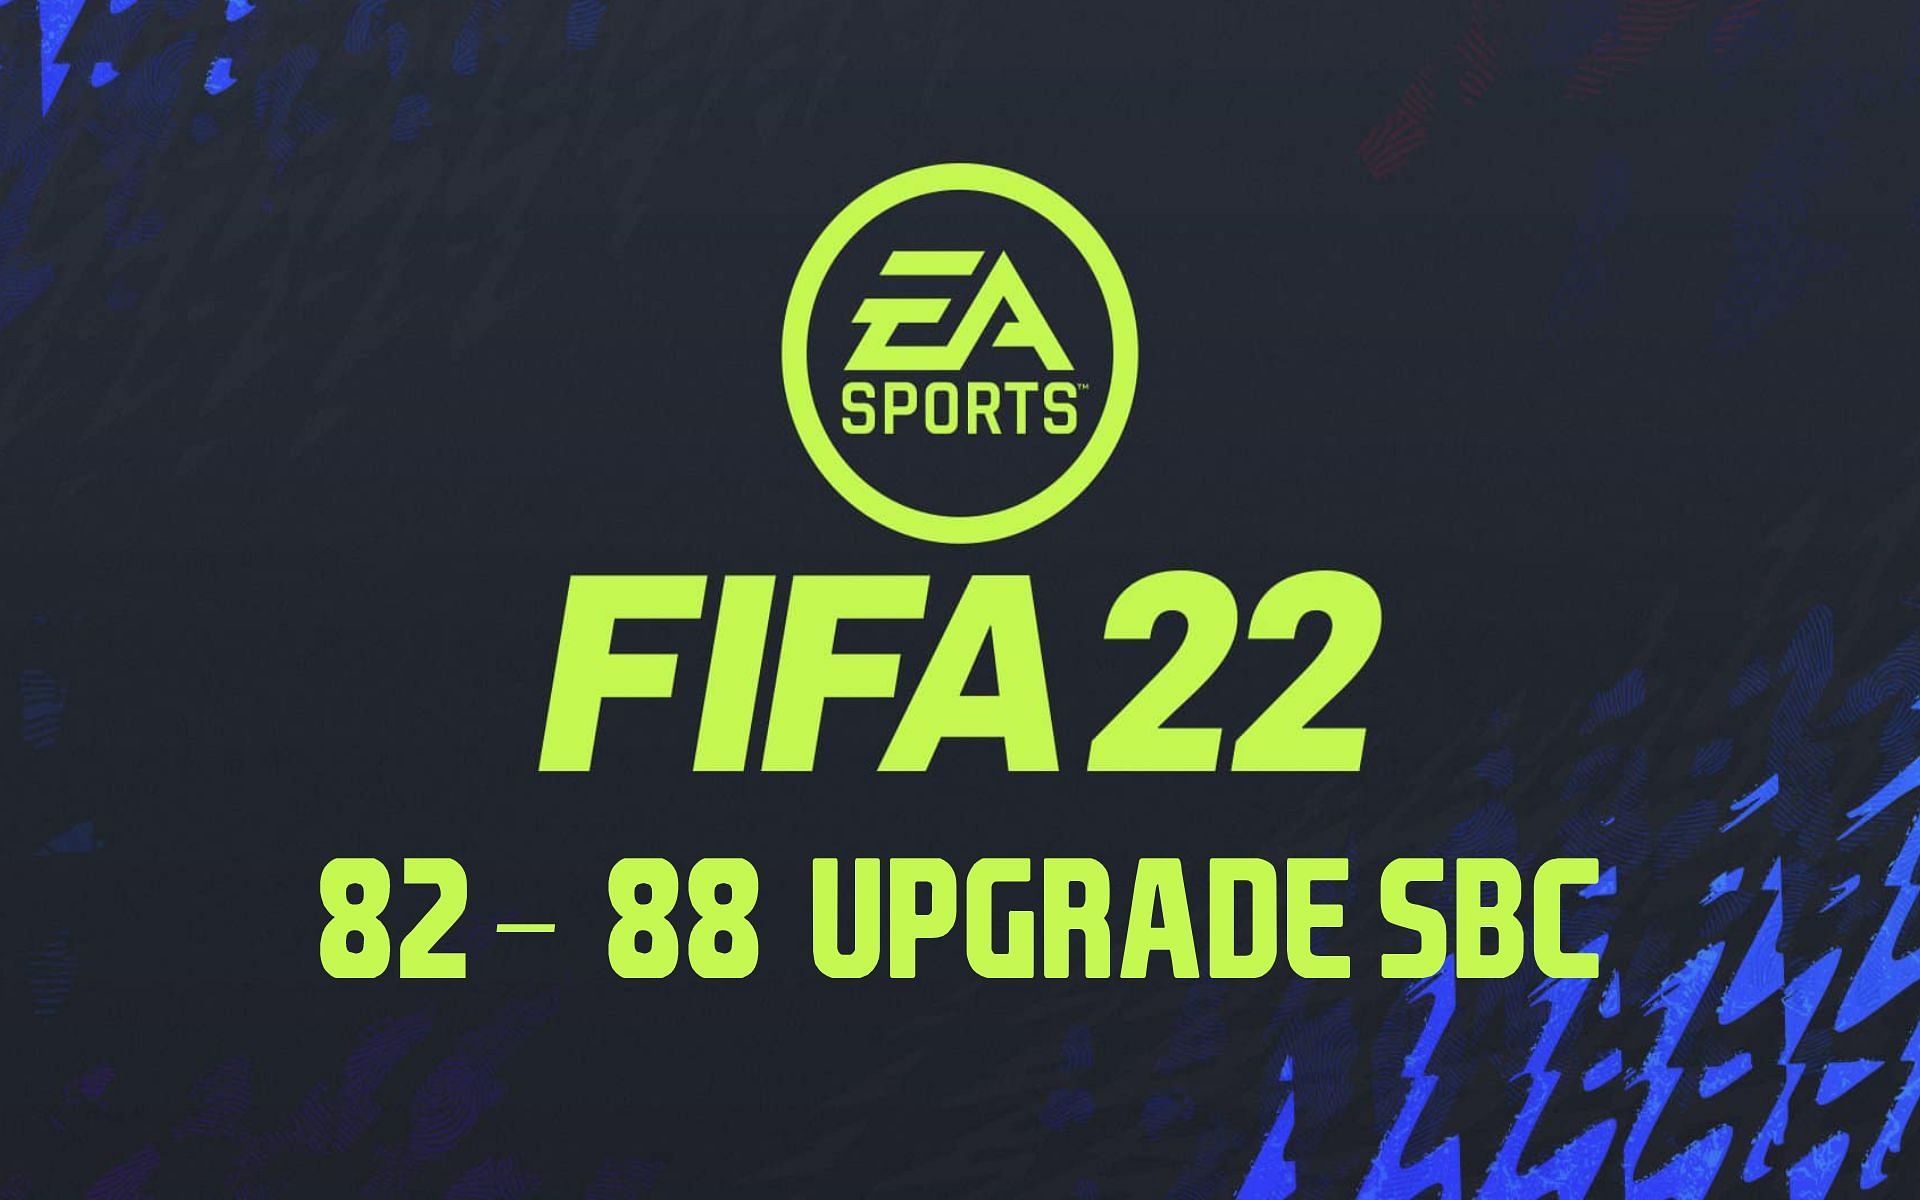 82 - 88 Upgrade SBC in FIFA 22 Ultimate Team (Image via Sportskeeda)